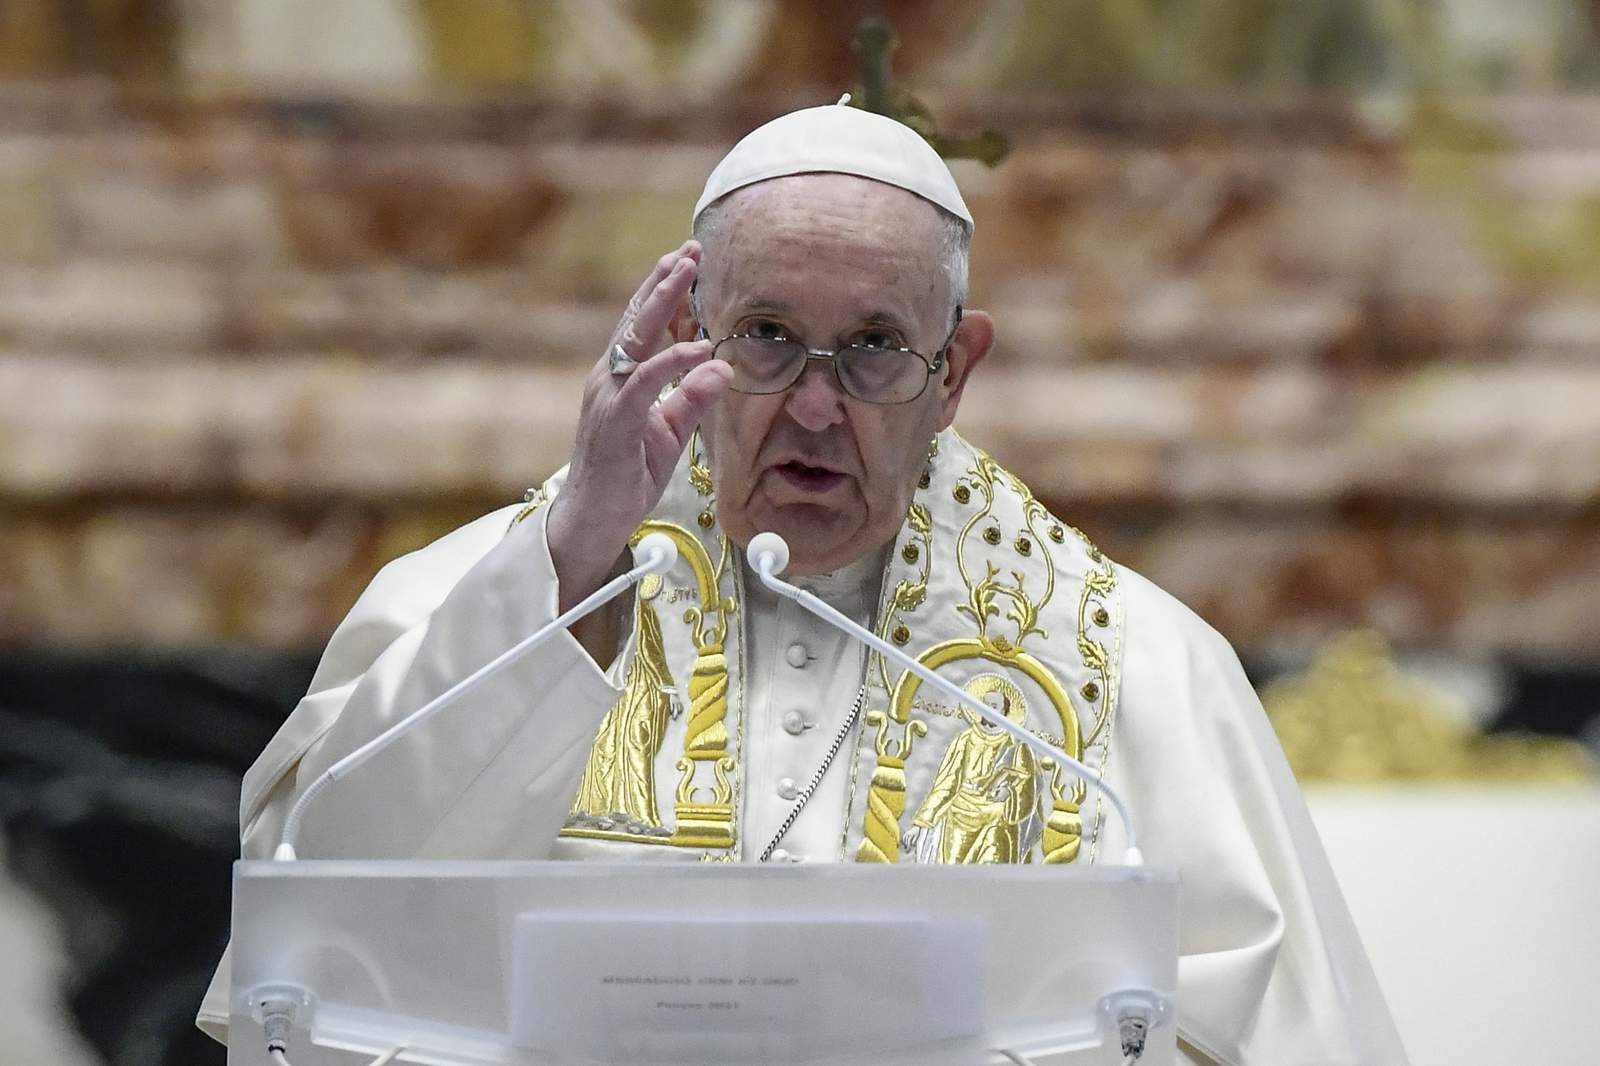 In Easter speech, pope calls wars in pandemic 'scandalous'